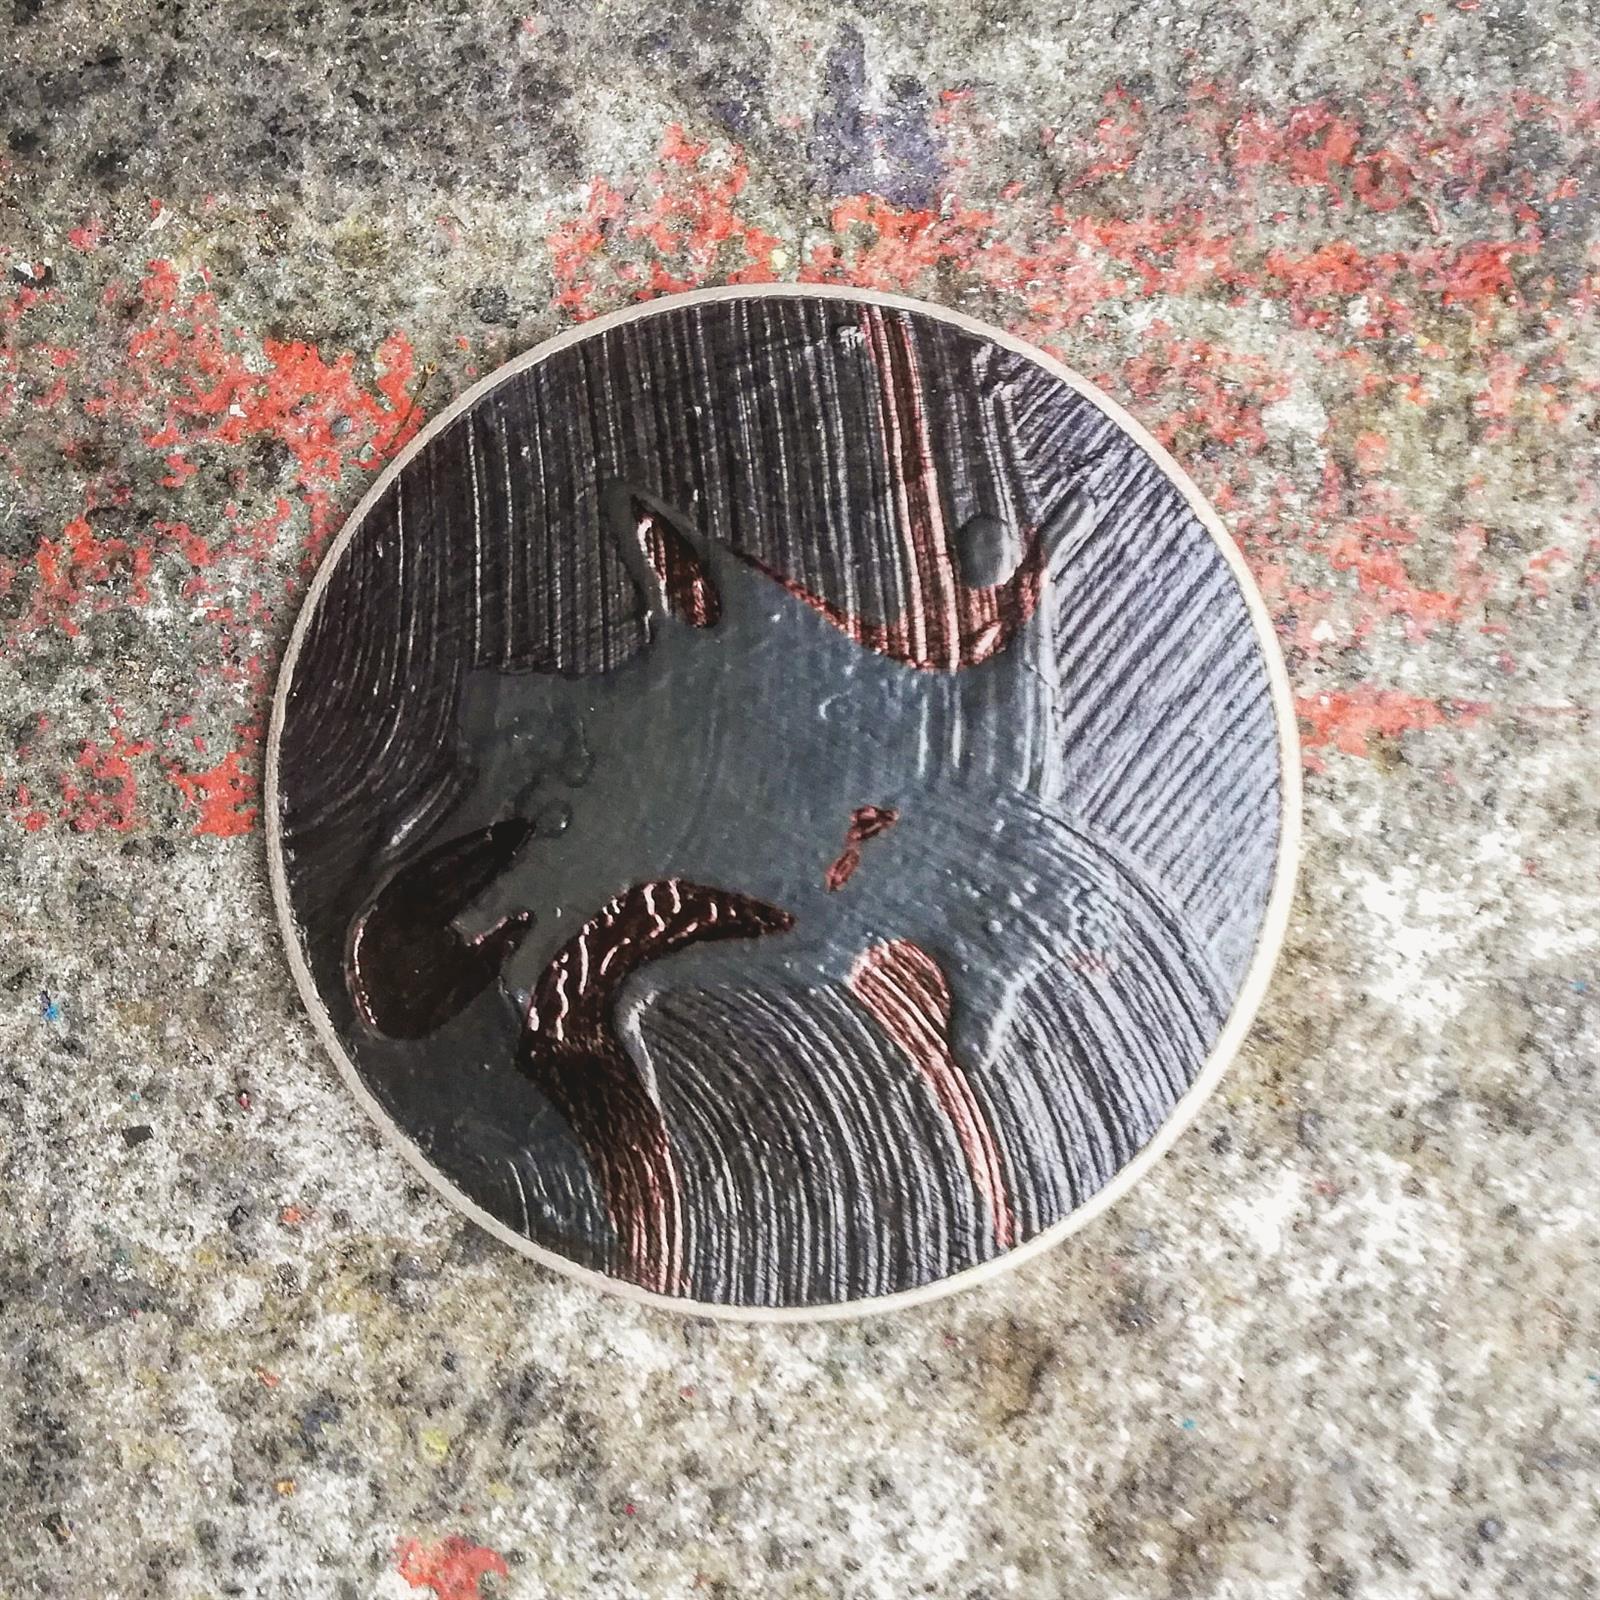 Moneta nomade | 2020 | diametro cm. 10 | Acrilici, incisioni e cera d'api su legno